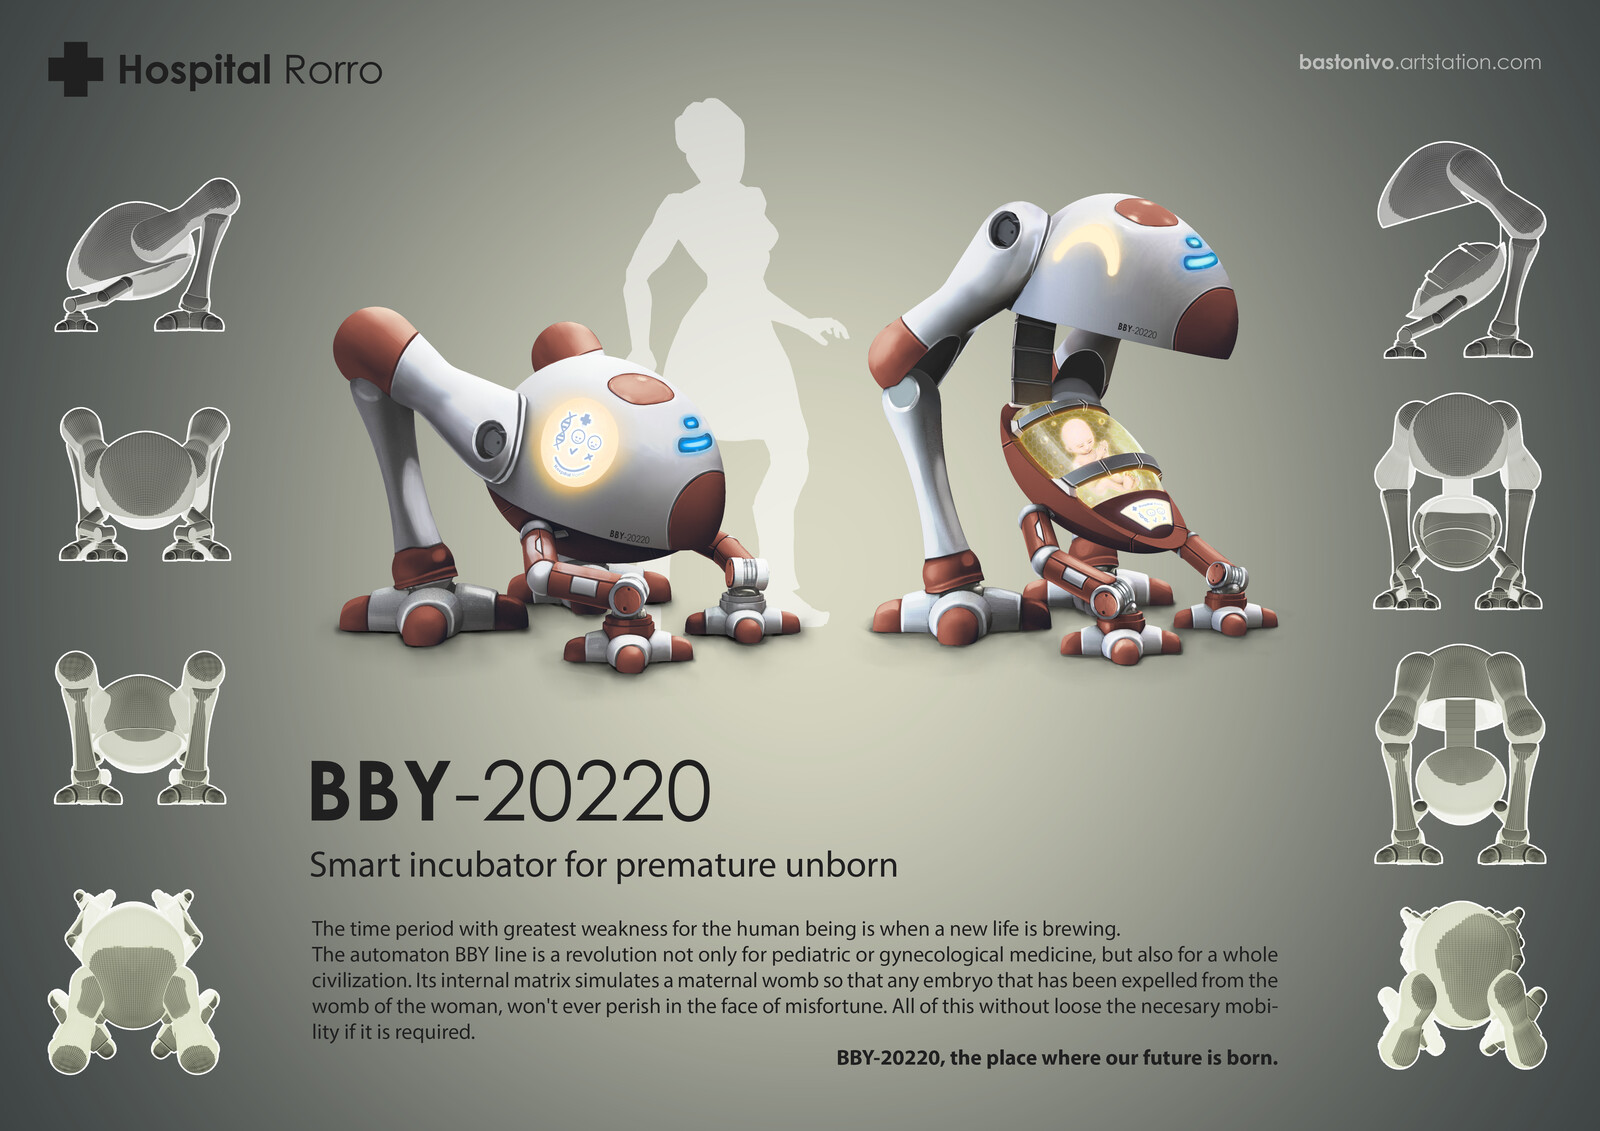 BBY-20220 - Smart incubator for premature unborn